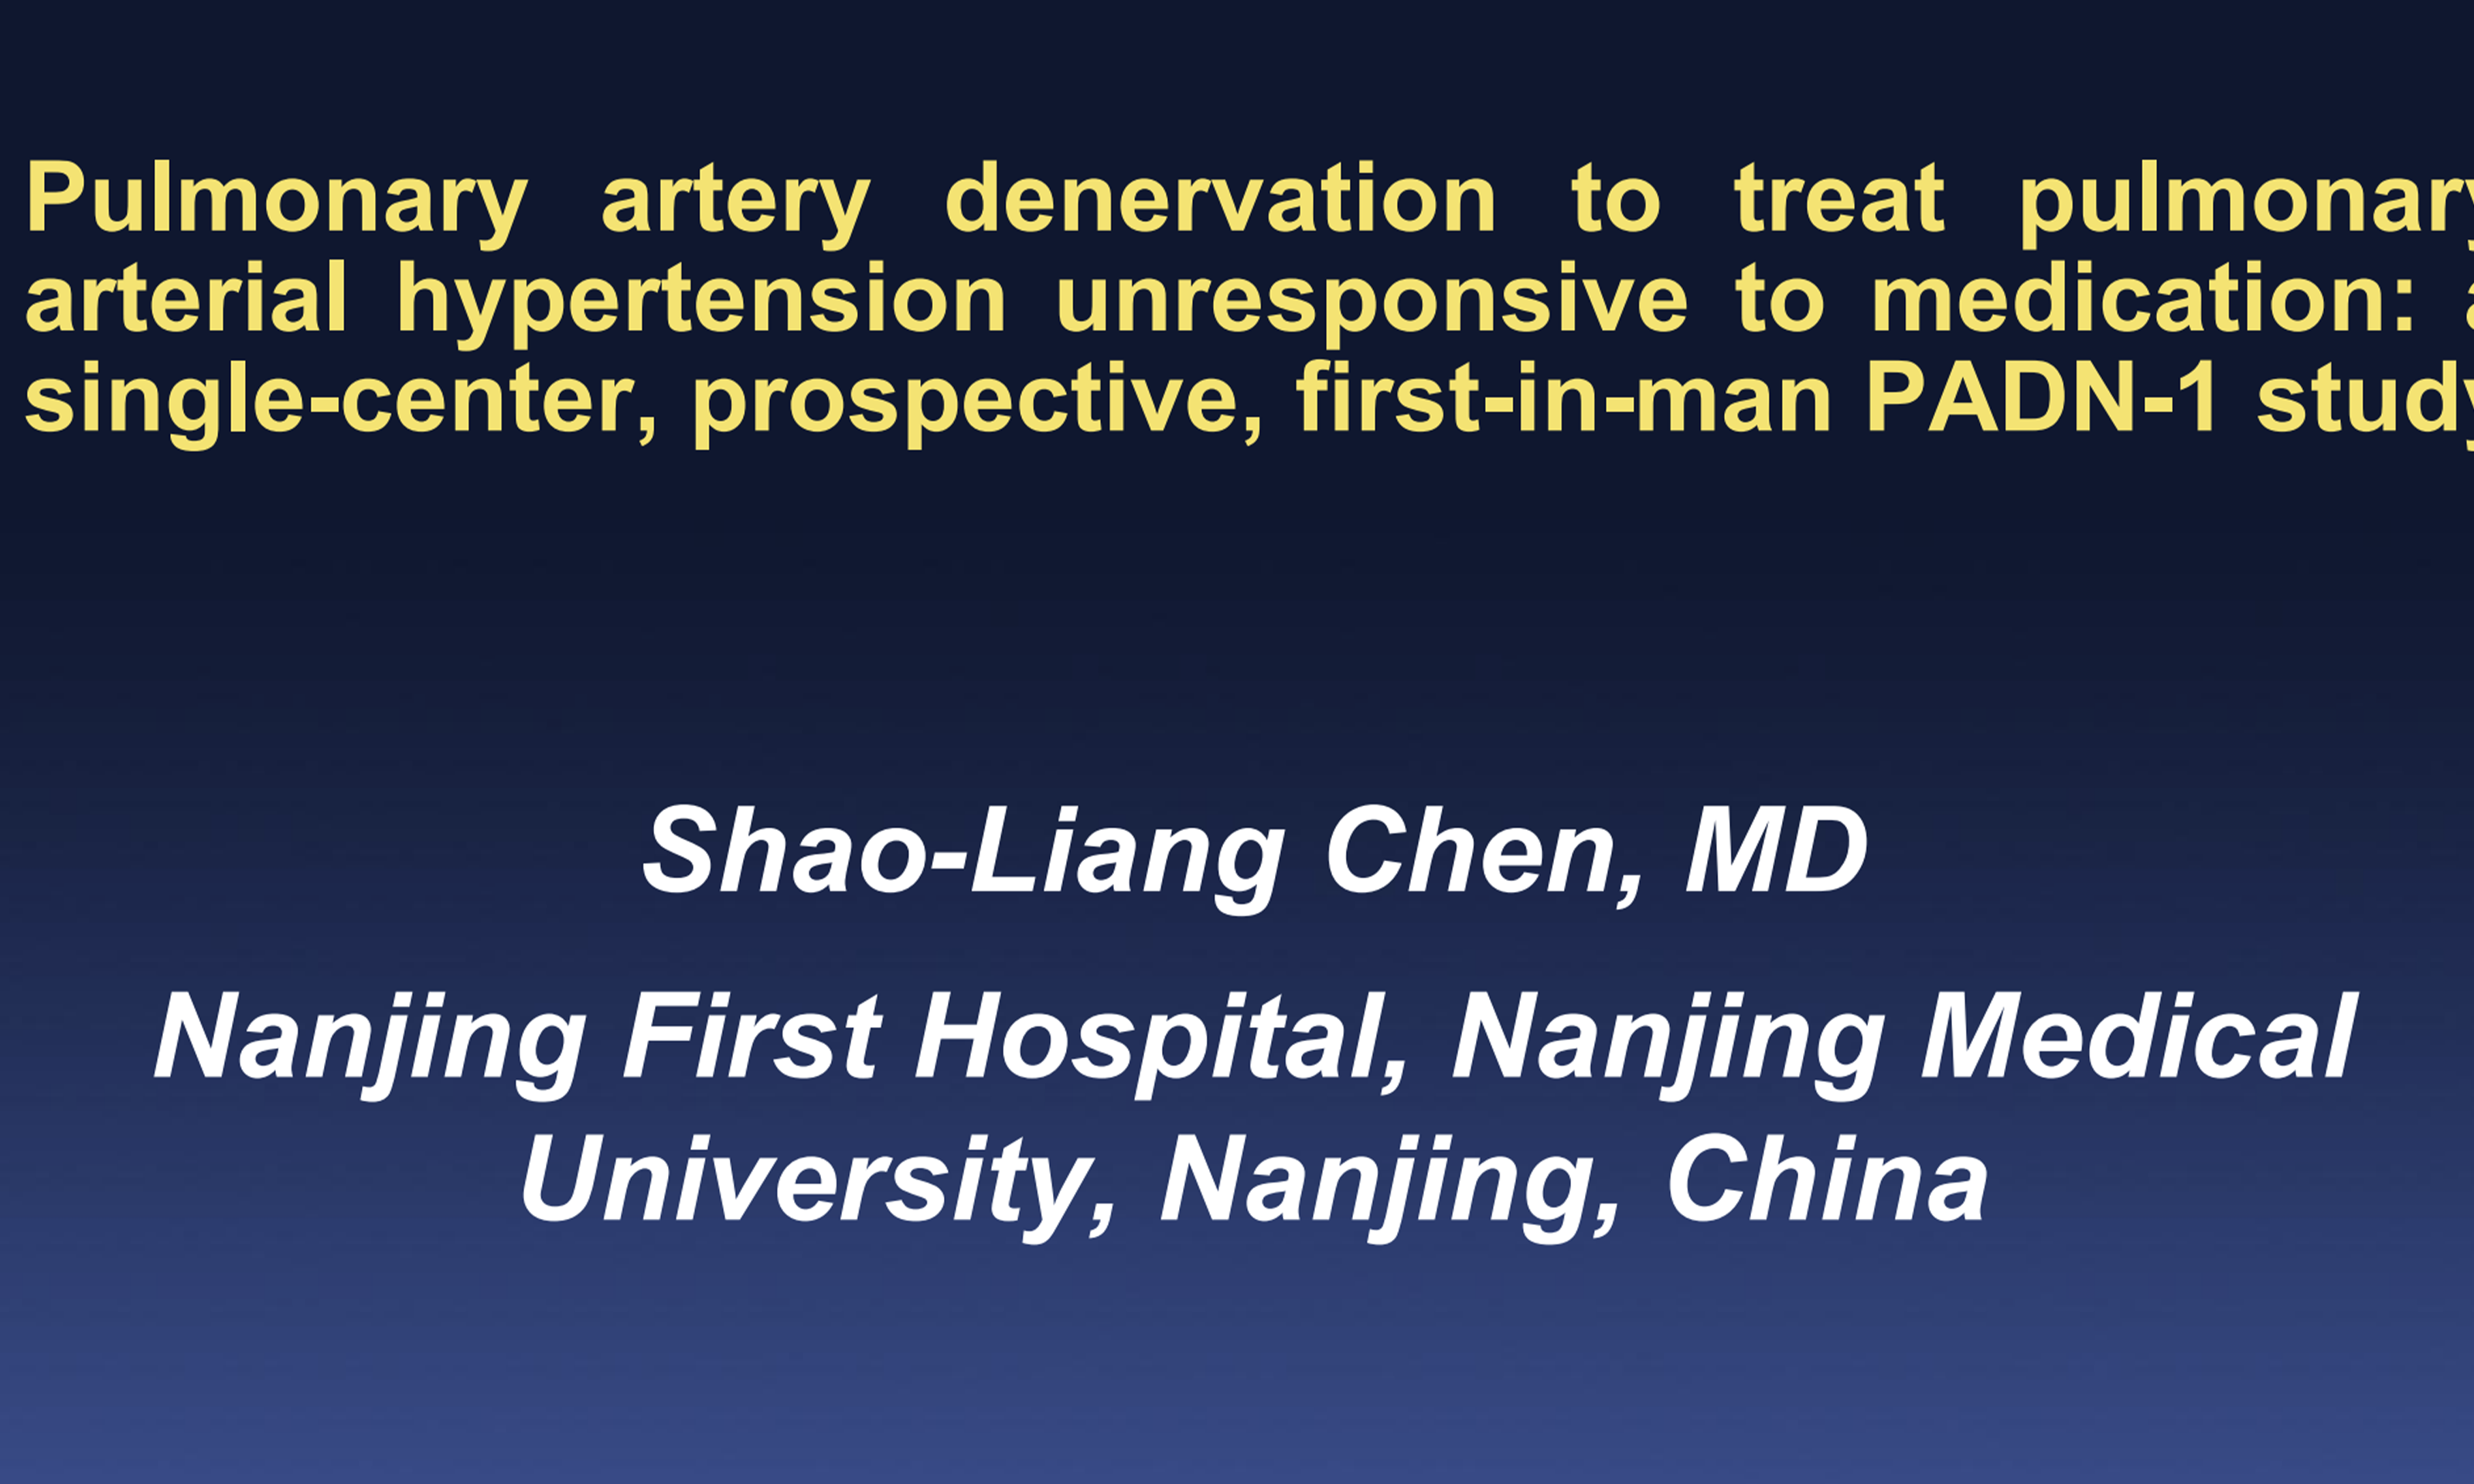 Pulmonary artery denervation to treat pulmonaryarterial hypertension unresponsive to medication: a single-center, prospective, first-in-man PADN-1 study